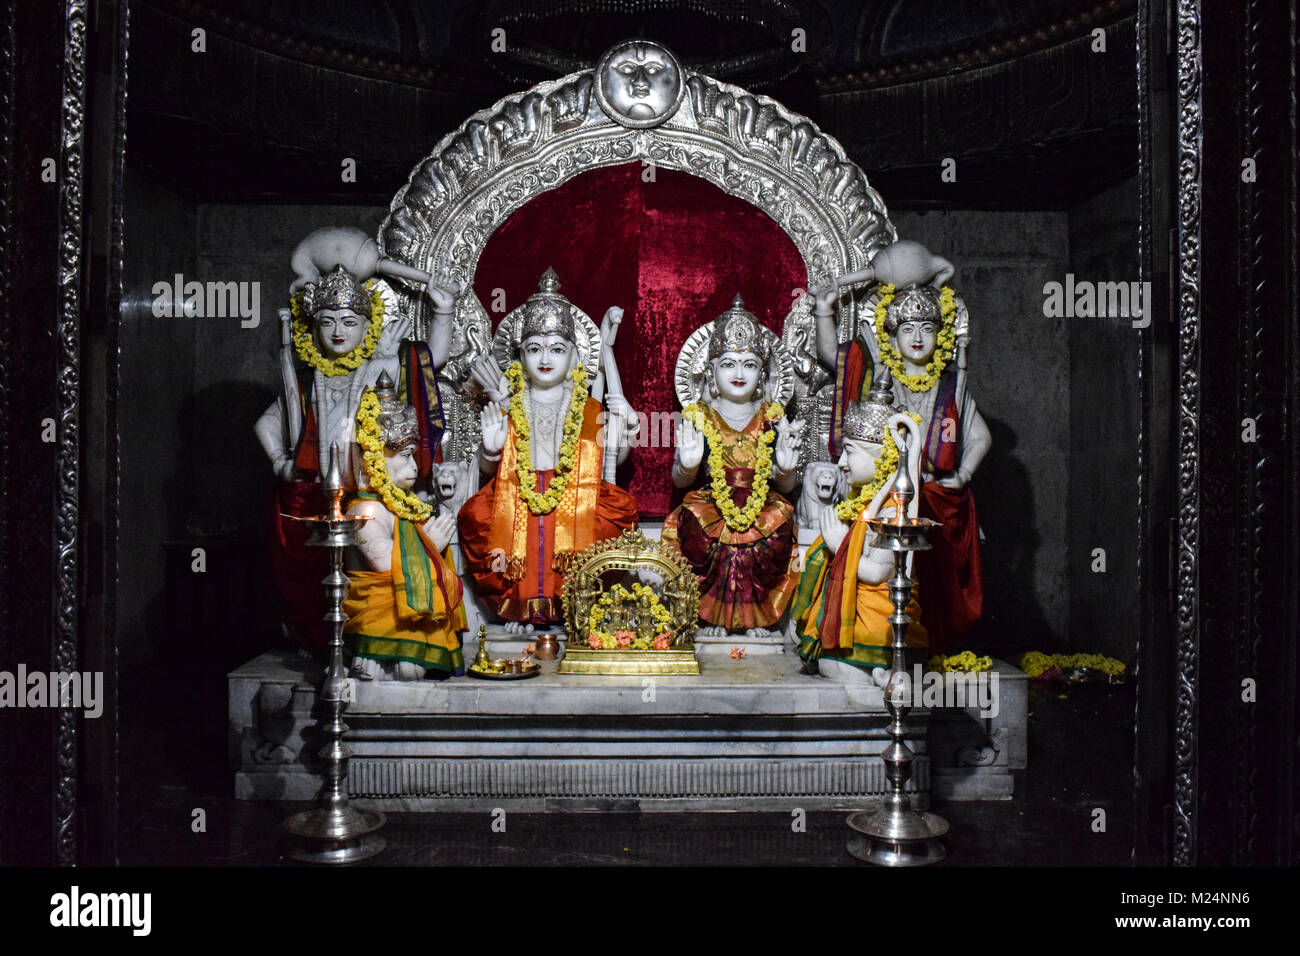 Srirama the hindu god hi-res stock photography and images - Alamy